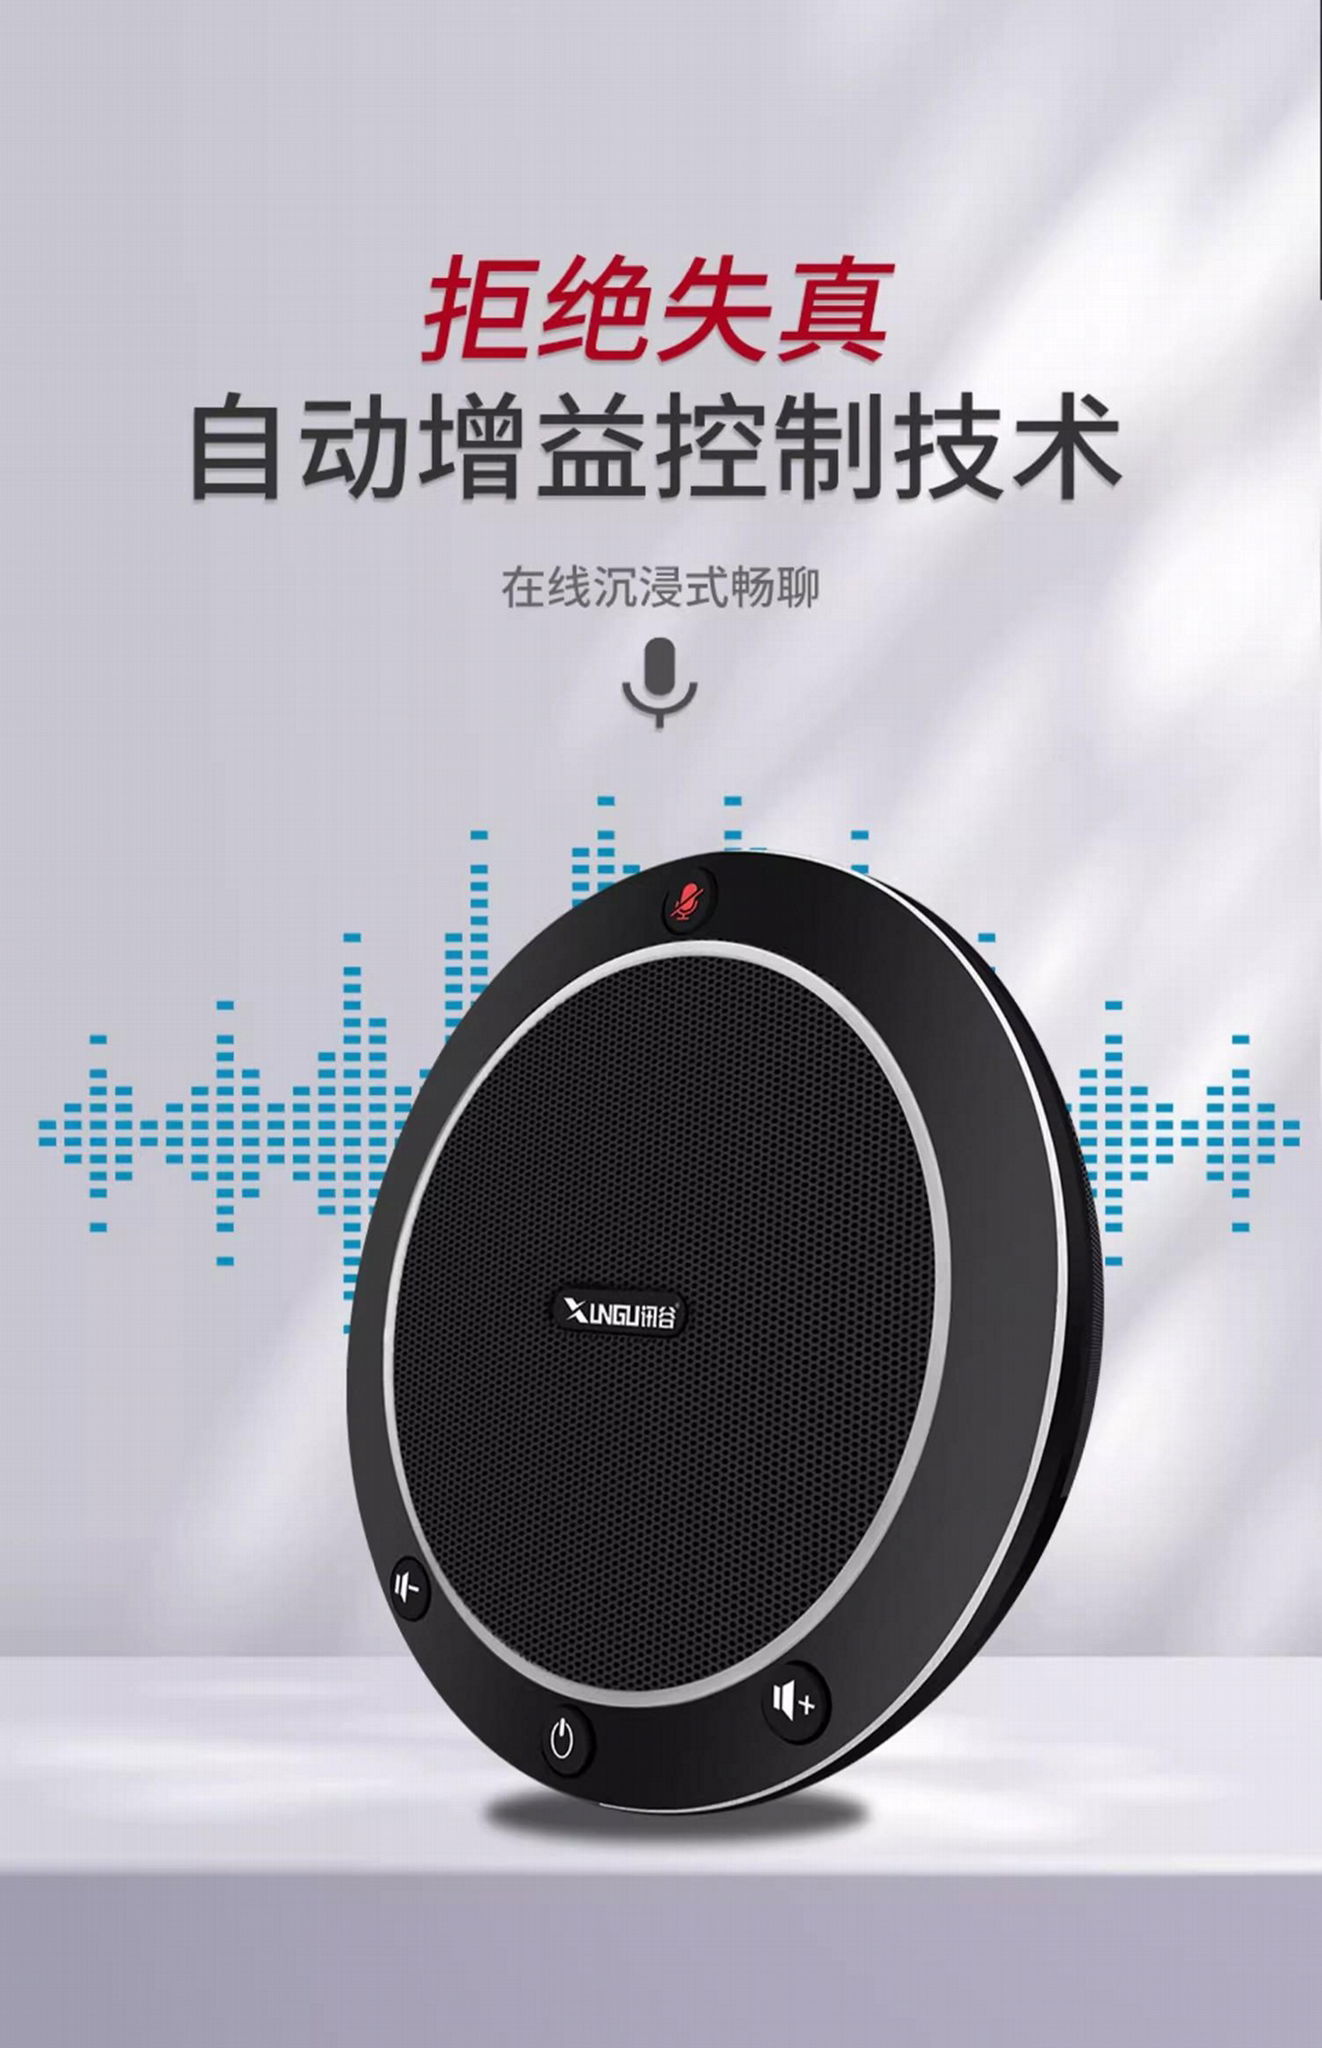 bluetooth/USB Speakerphone, Speaker with built-in Mic